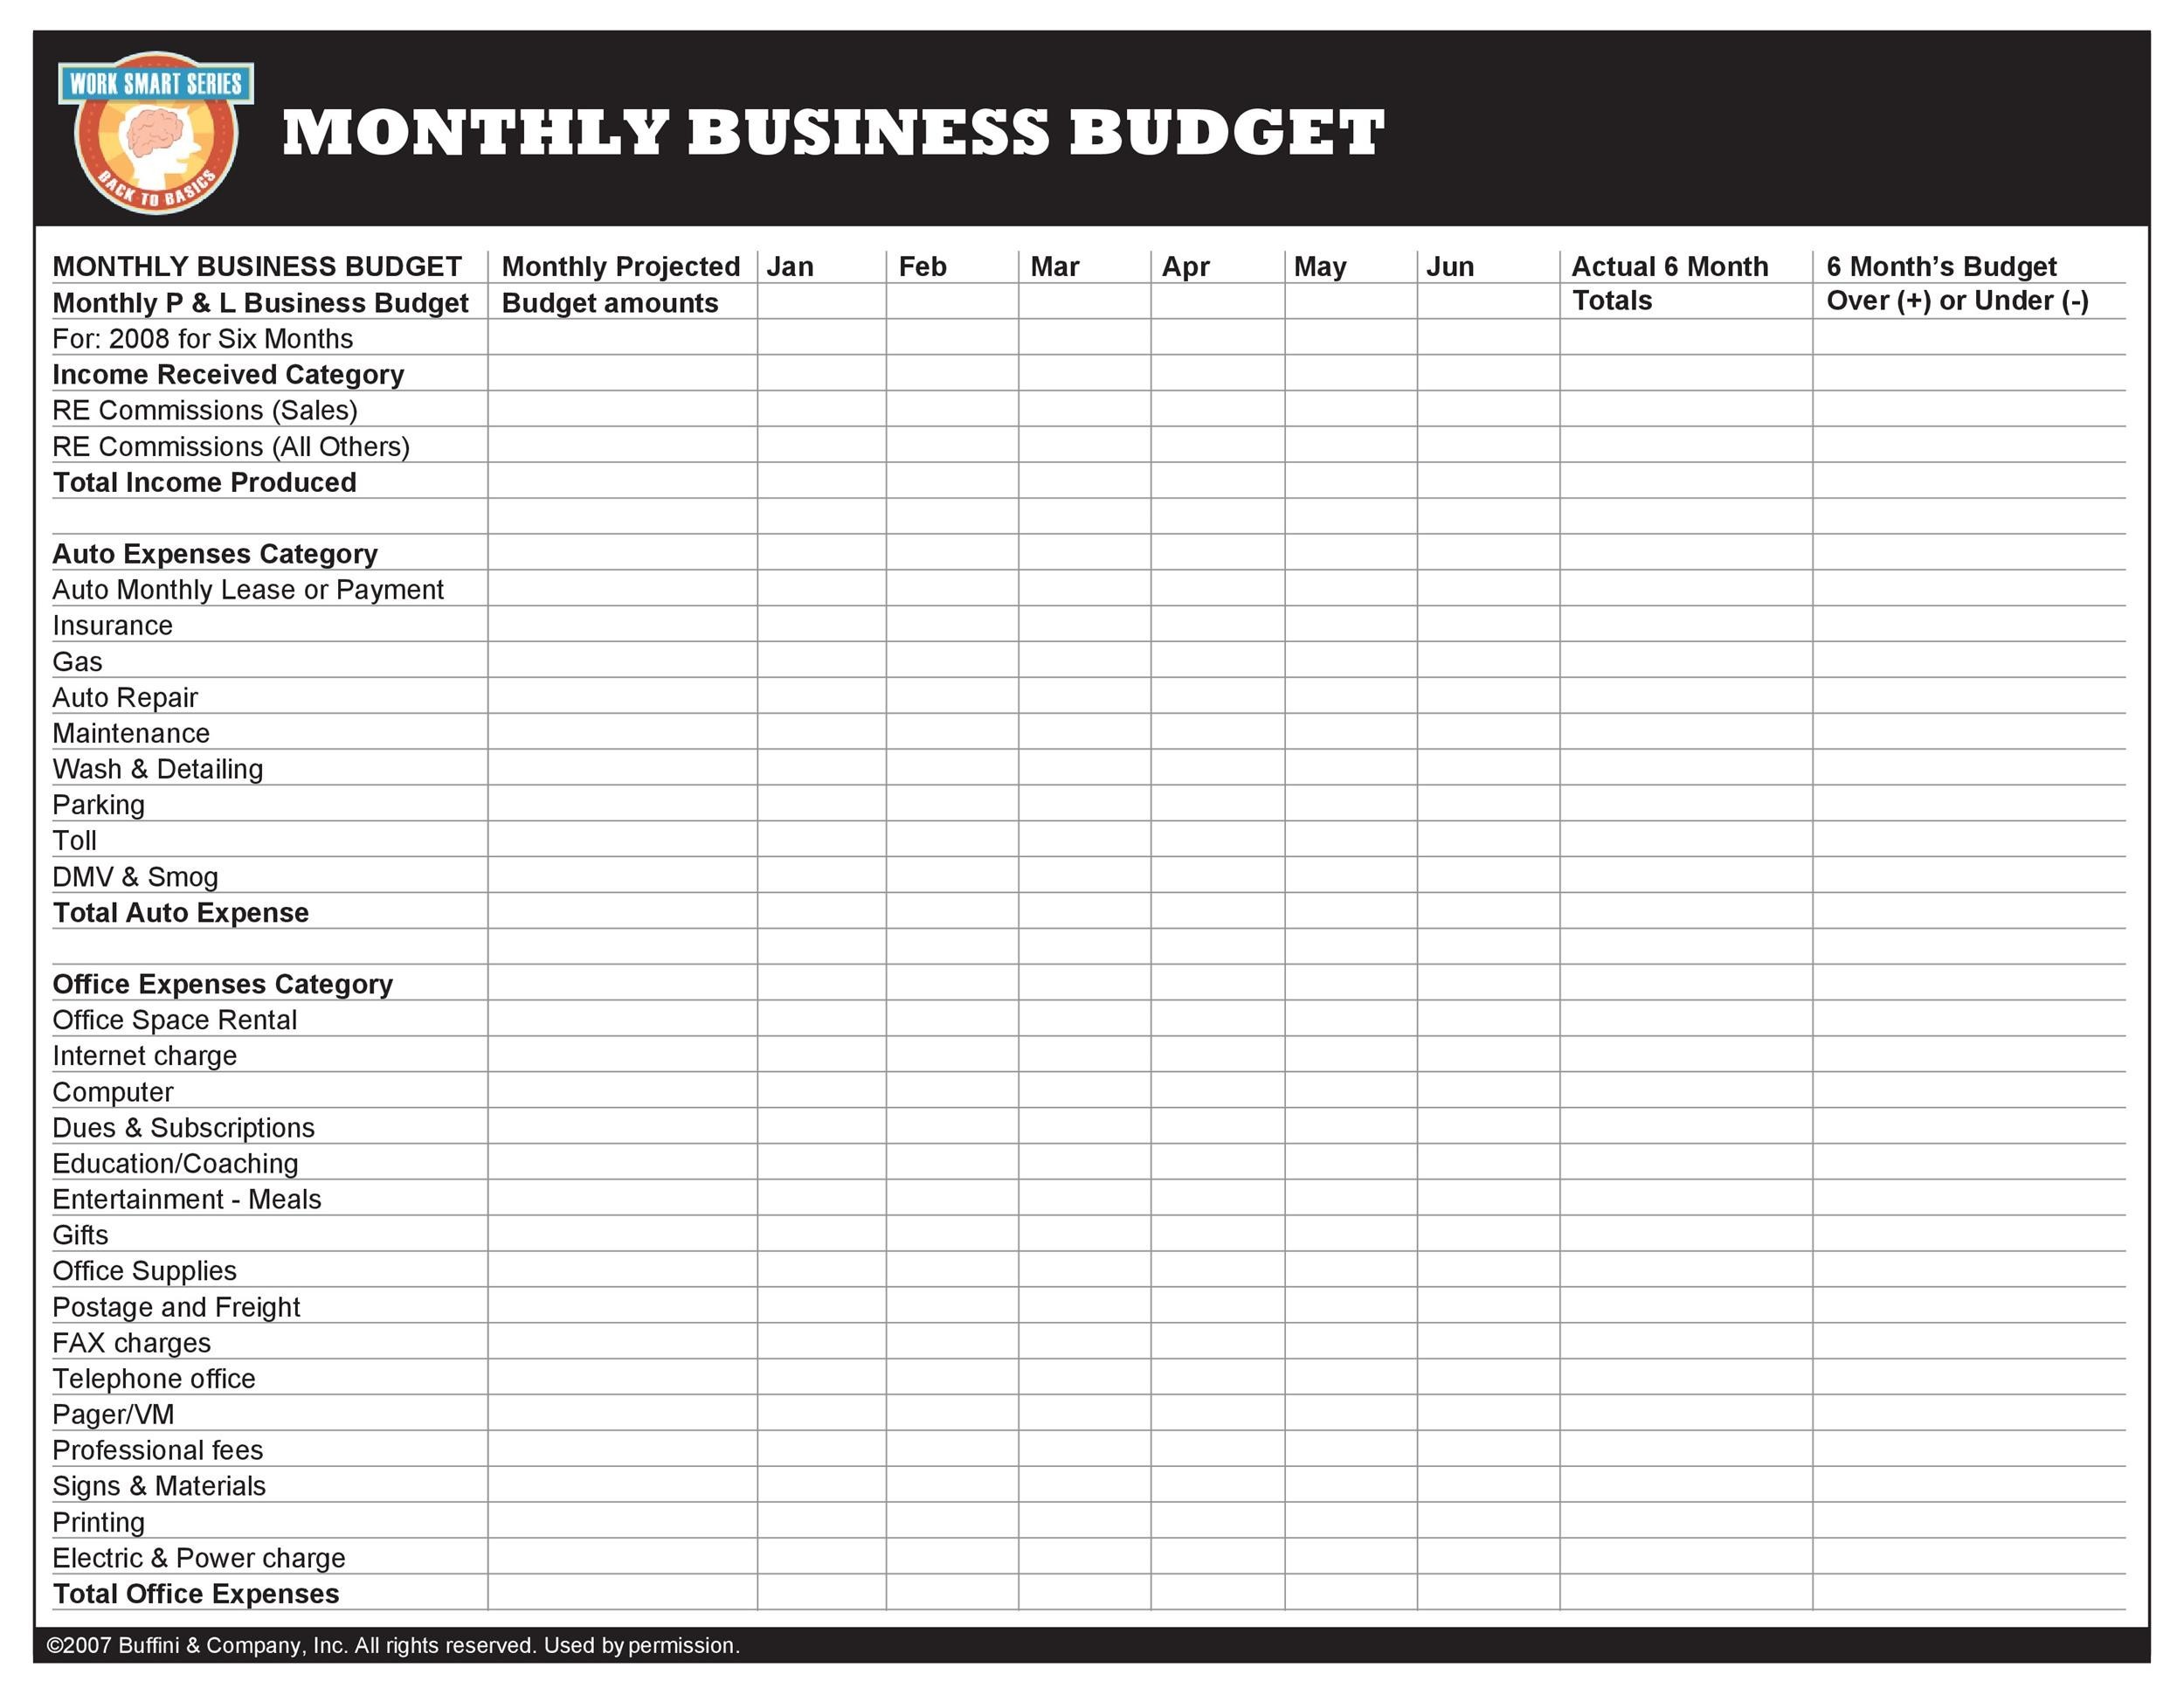 37 Handy Business Budget Templates (Excel Google Sheets) ᐅ TemplateLab